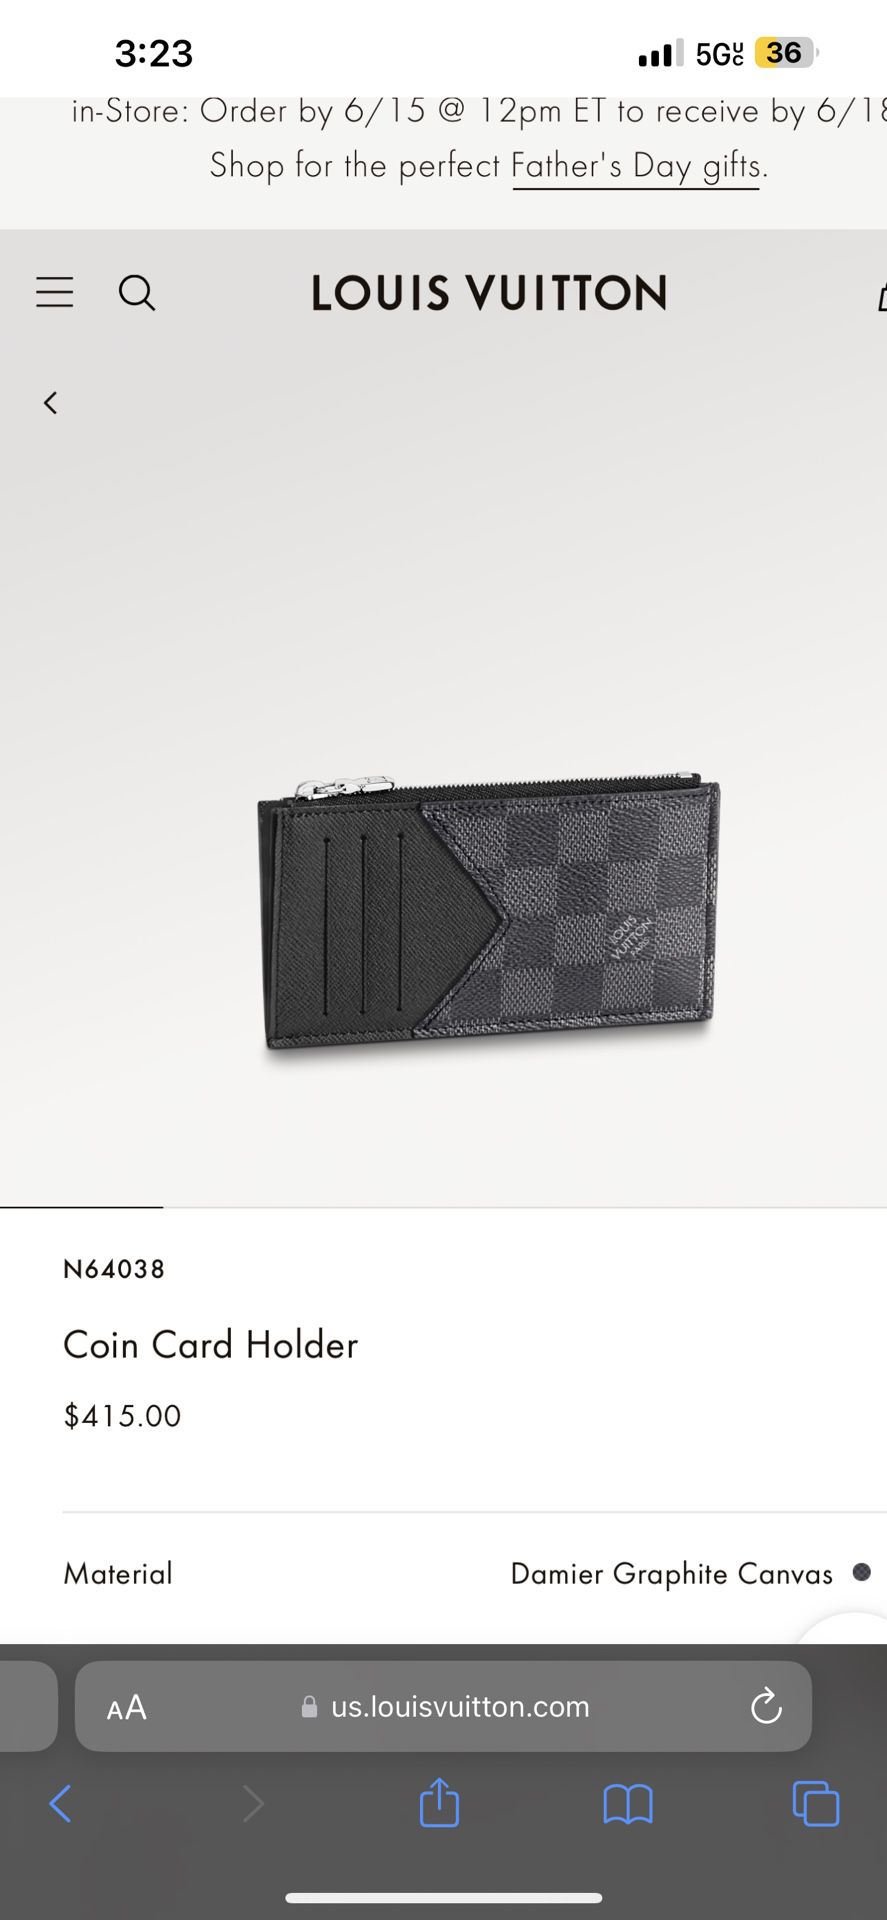 Louis Vuitton DAMIER GRAPHITE LV COIN CARD HOLDER Black Coin Cases N64038